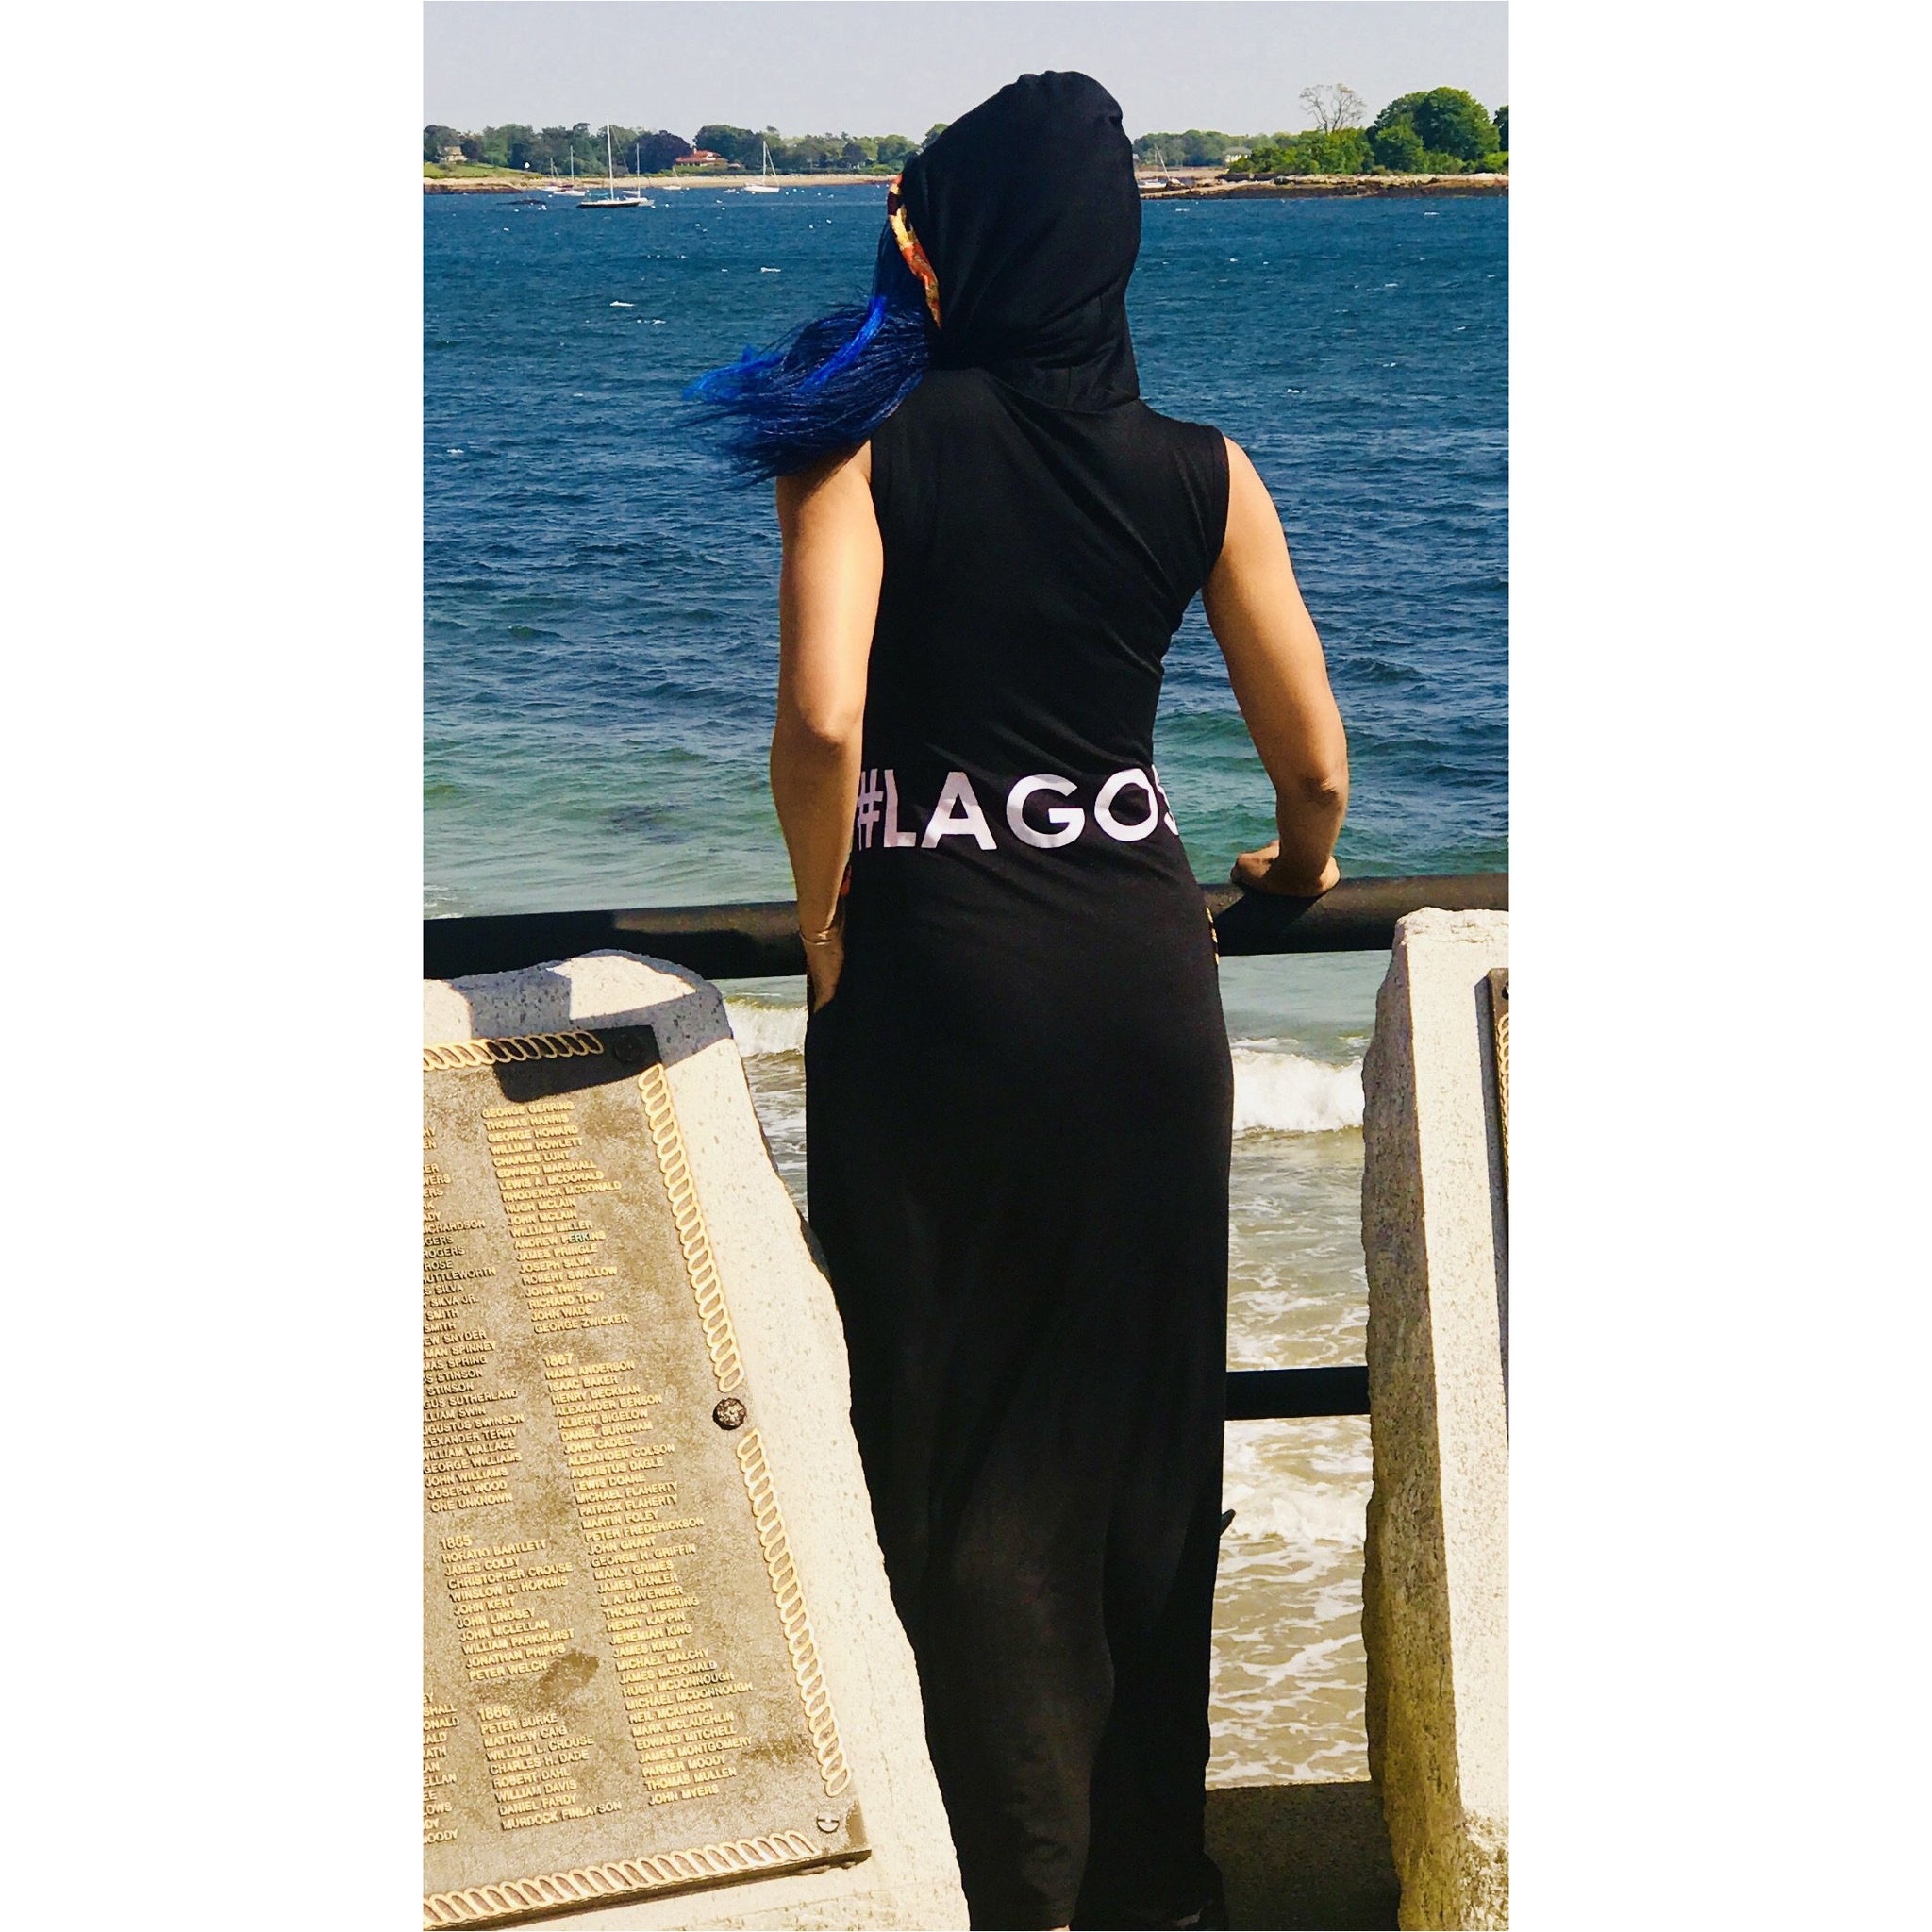 PepperDem Maxi Hooded Dress, #LAGOS Détail at Back